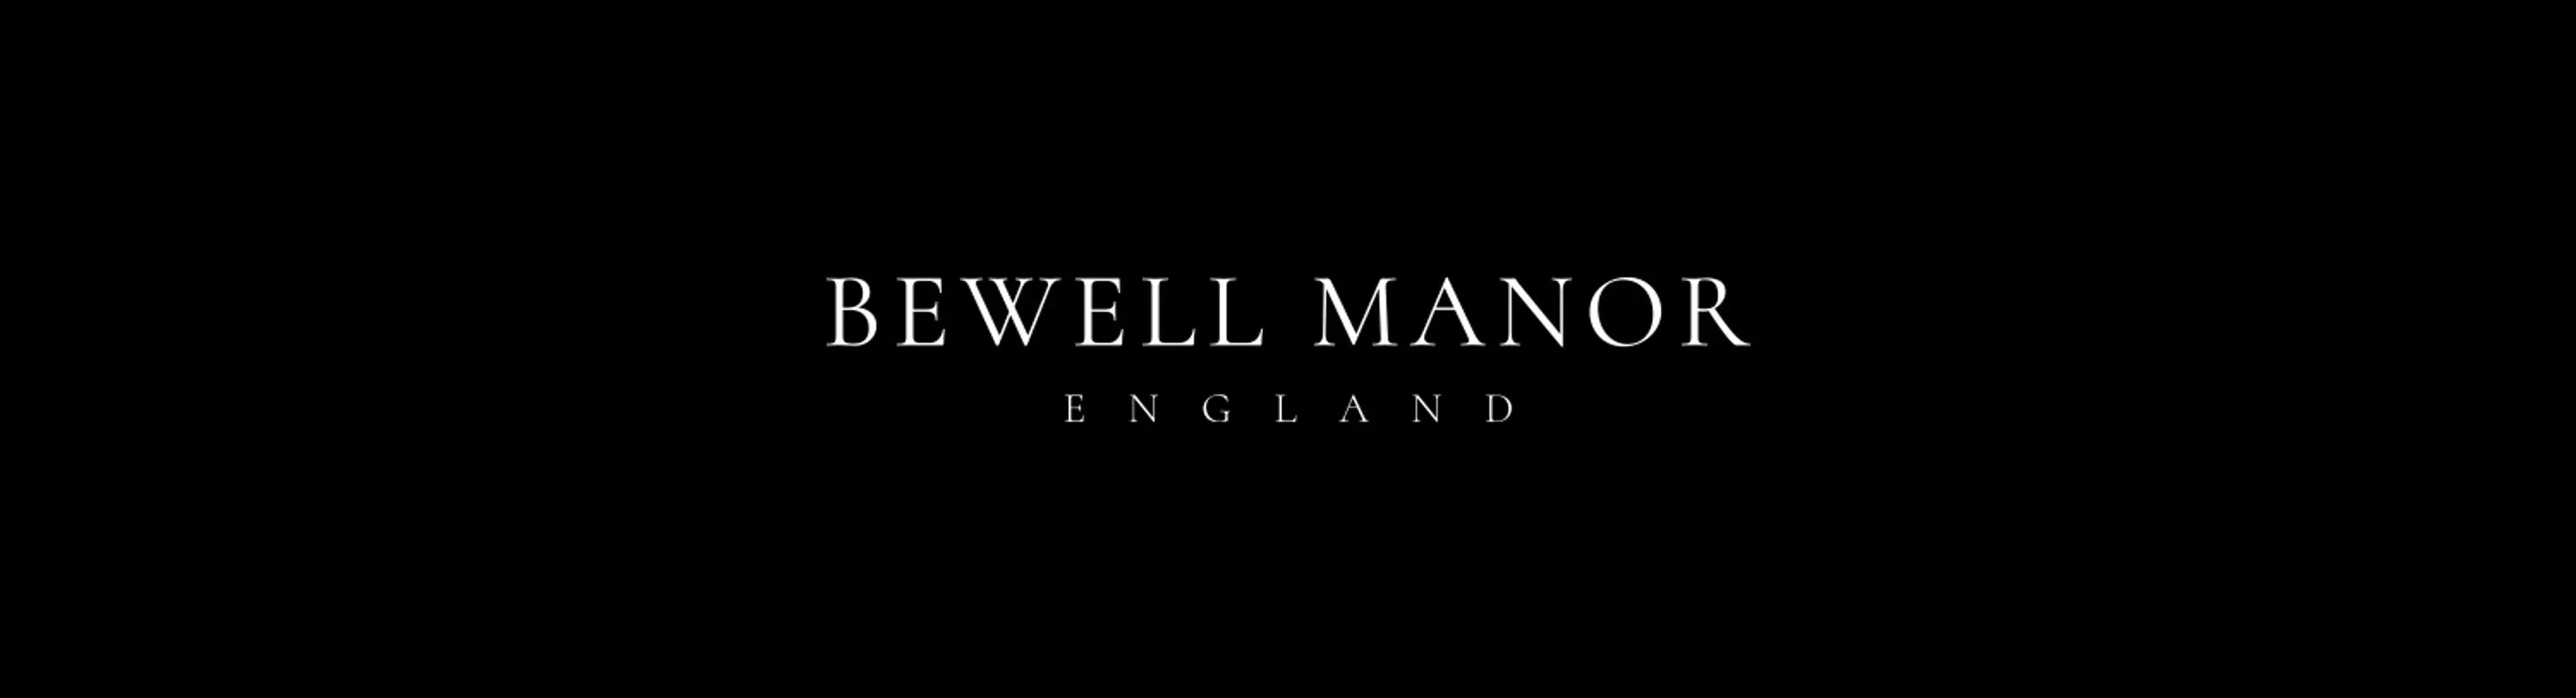 Bewell Manor